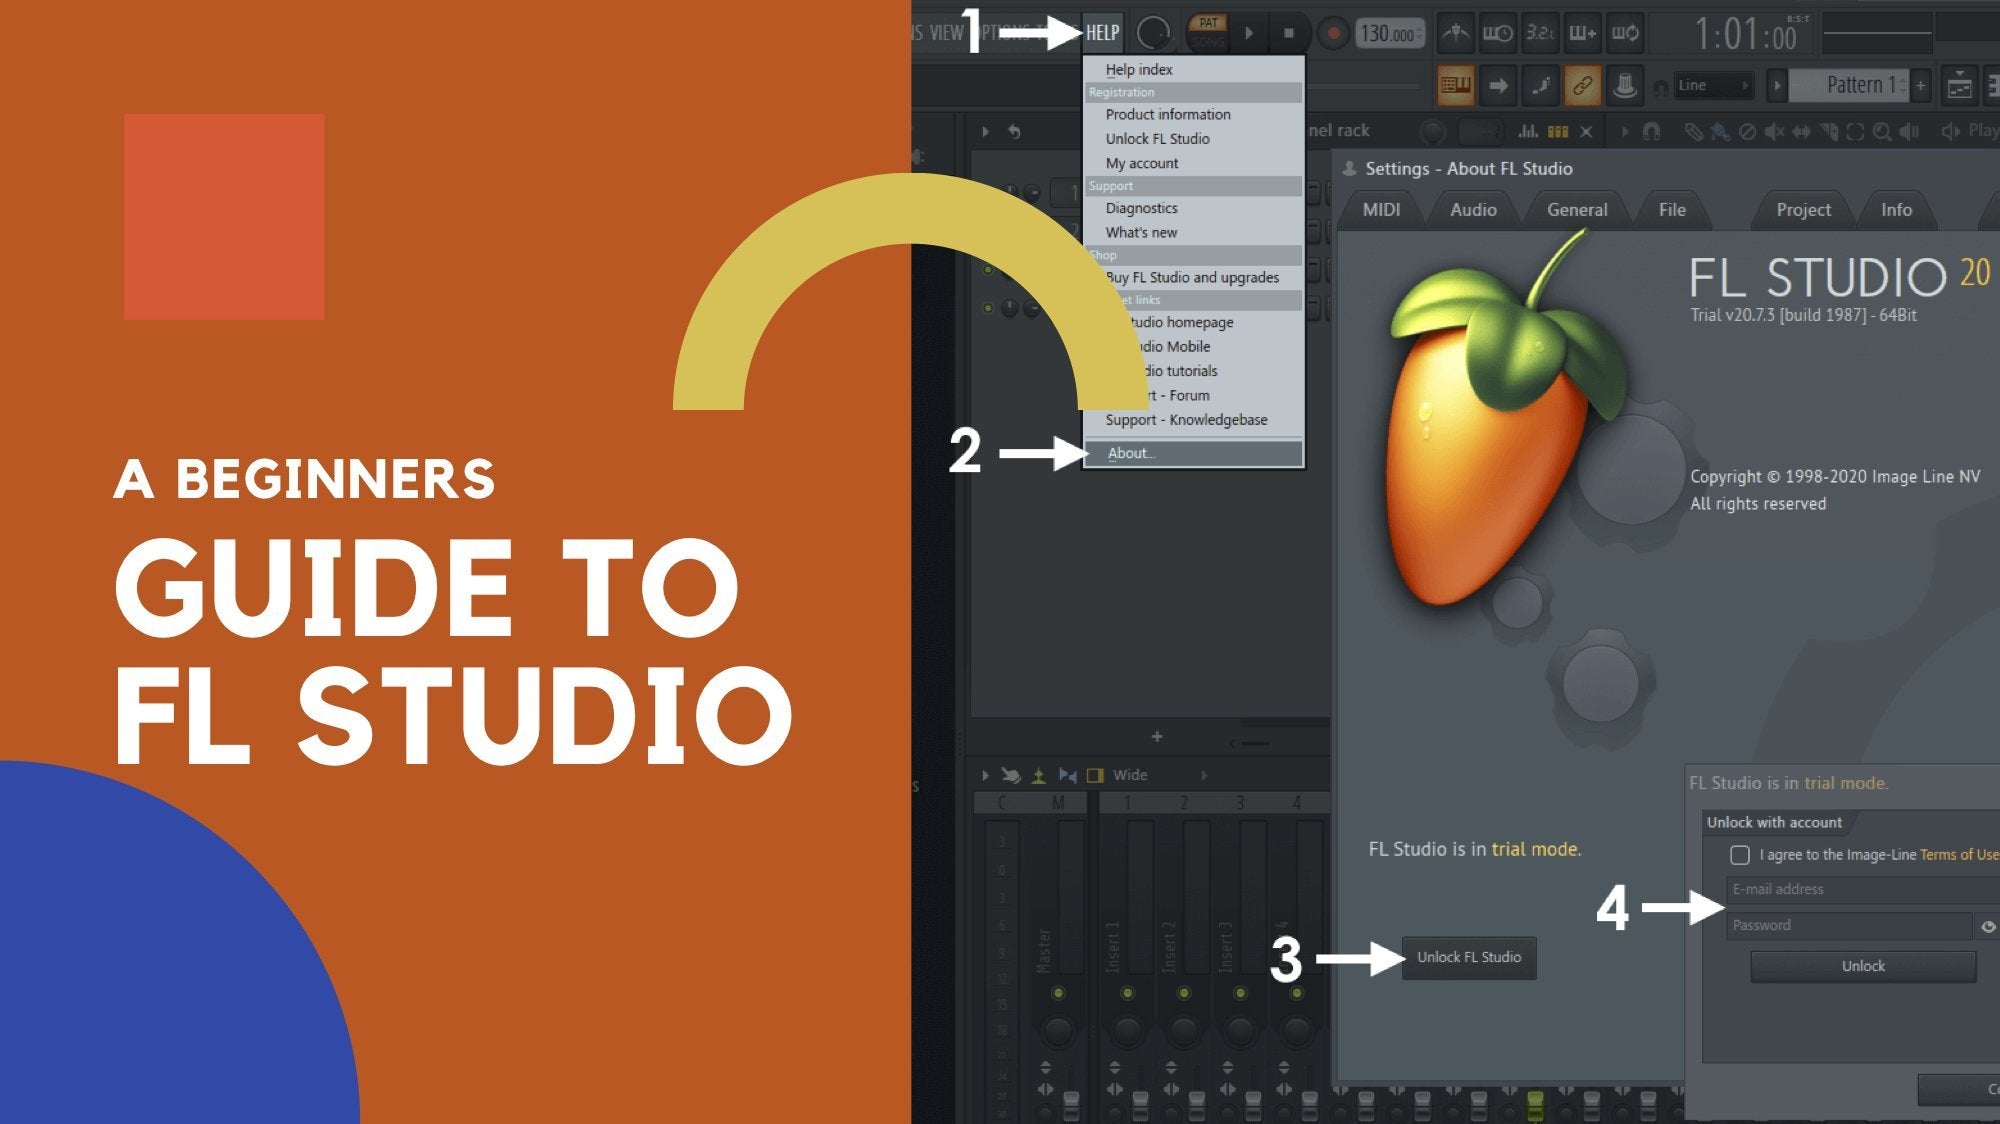 How to Use FL Studio